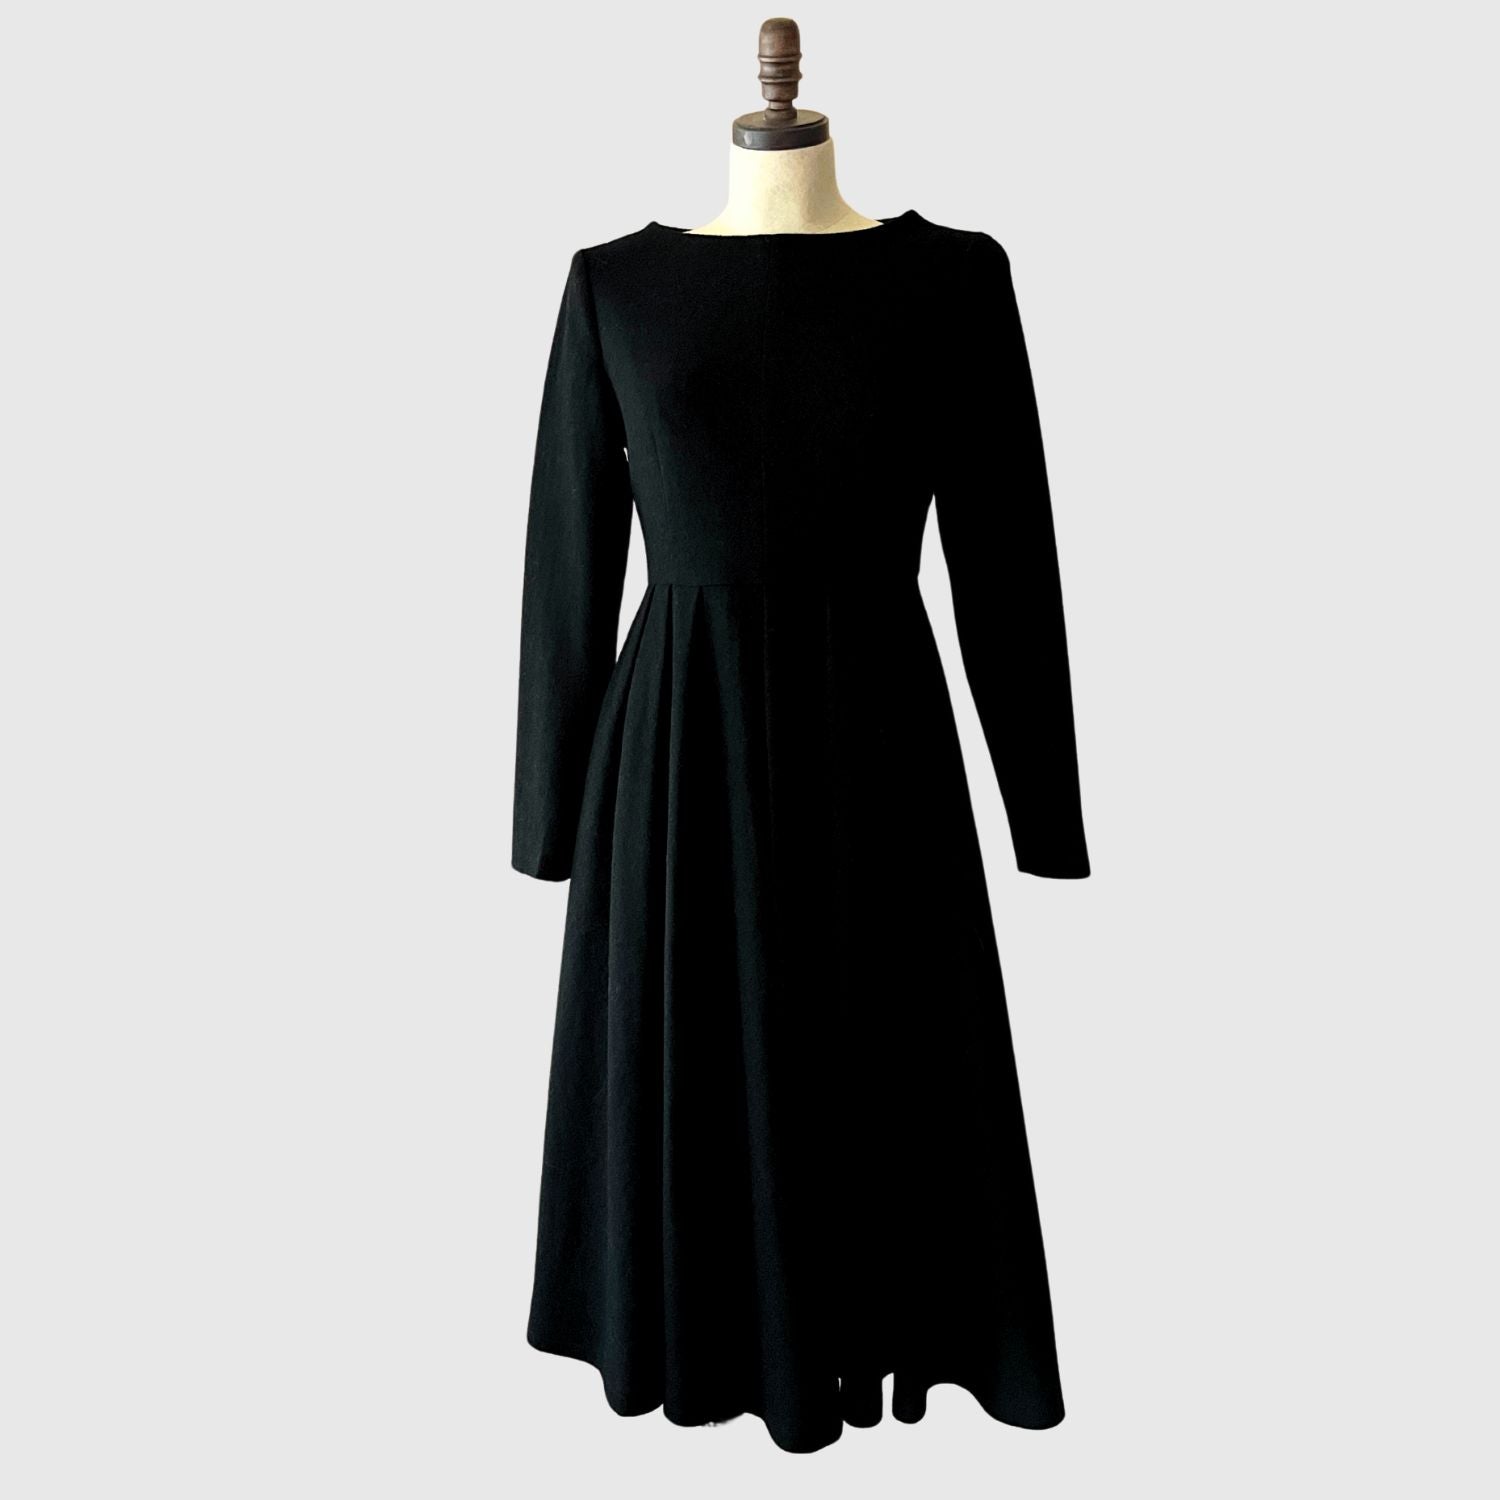 Black wool dress